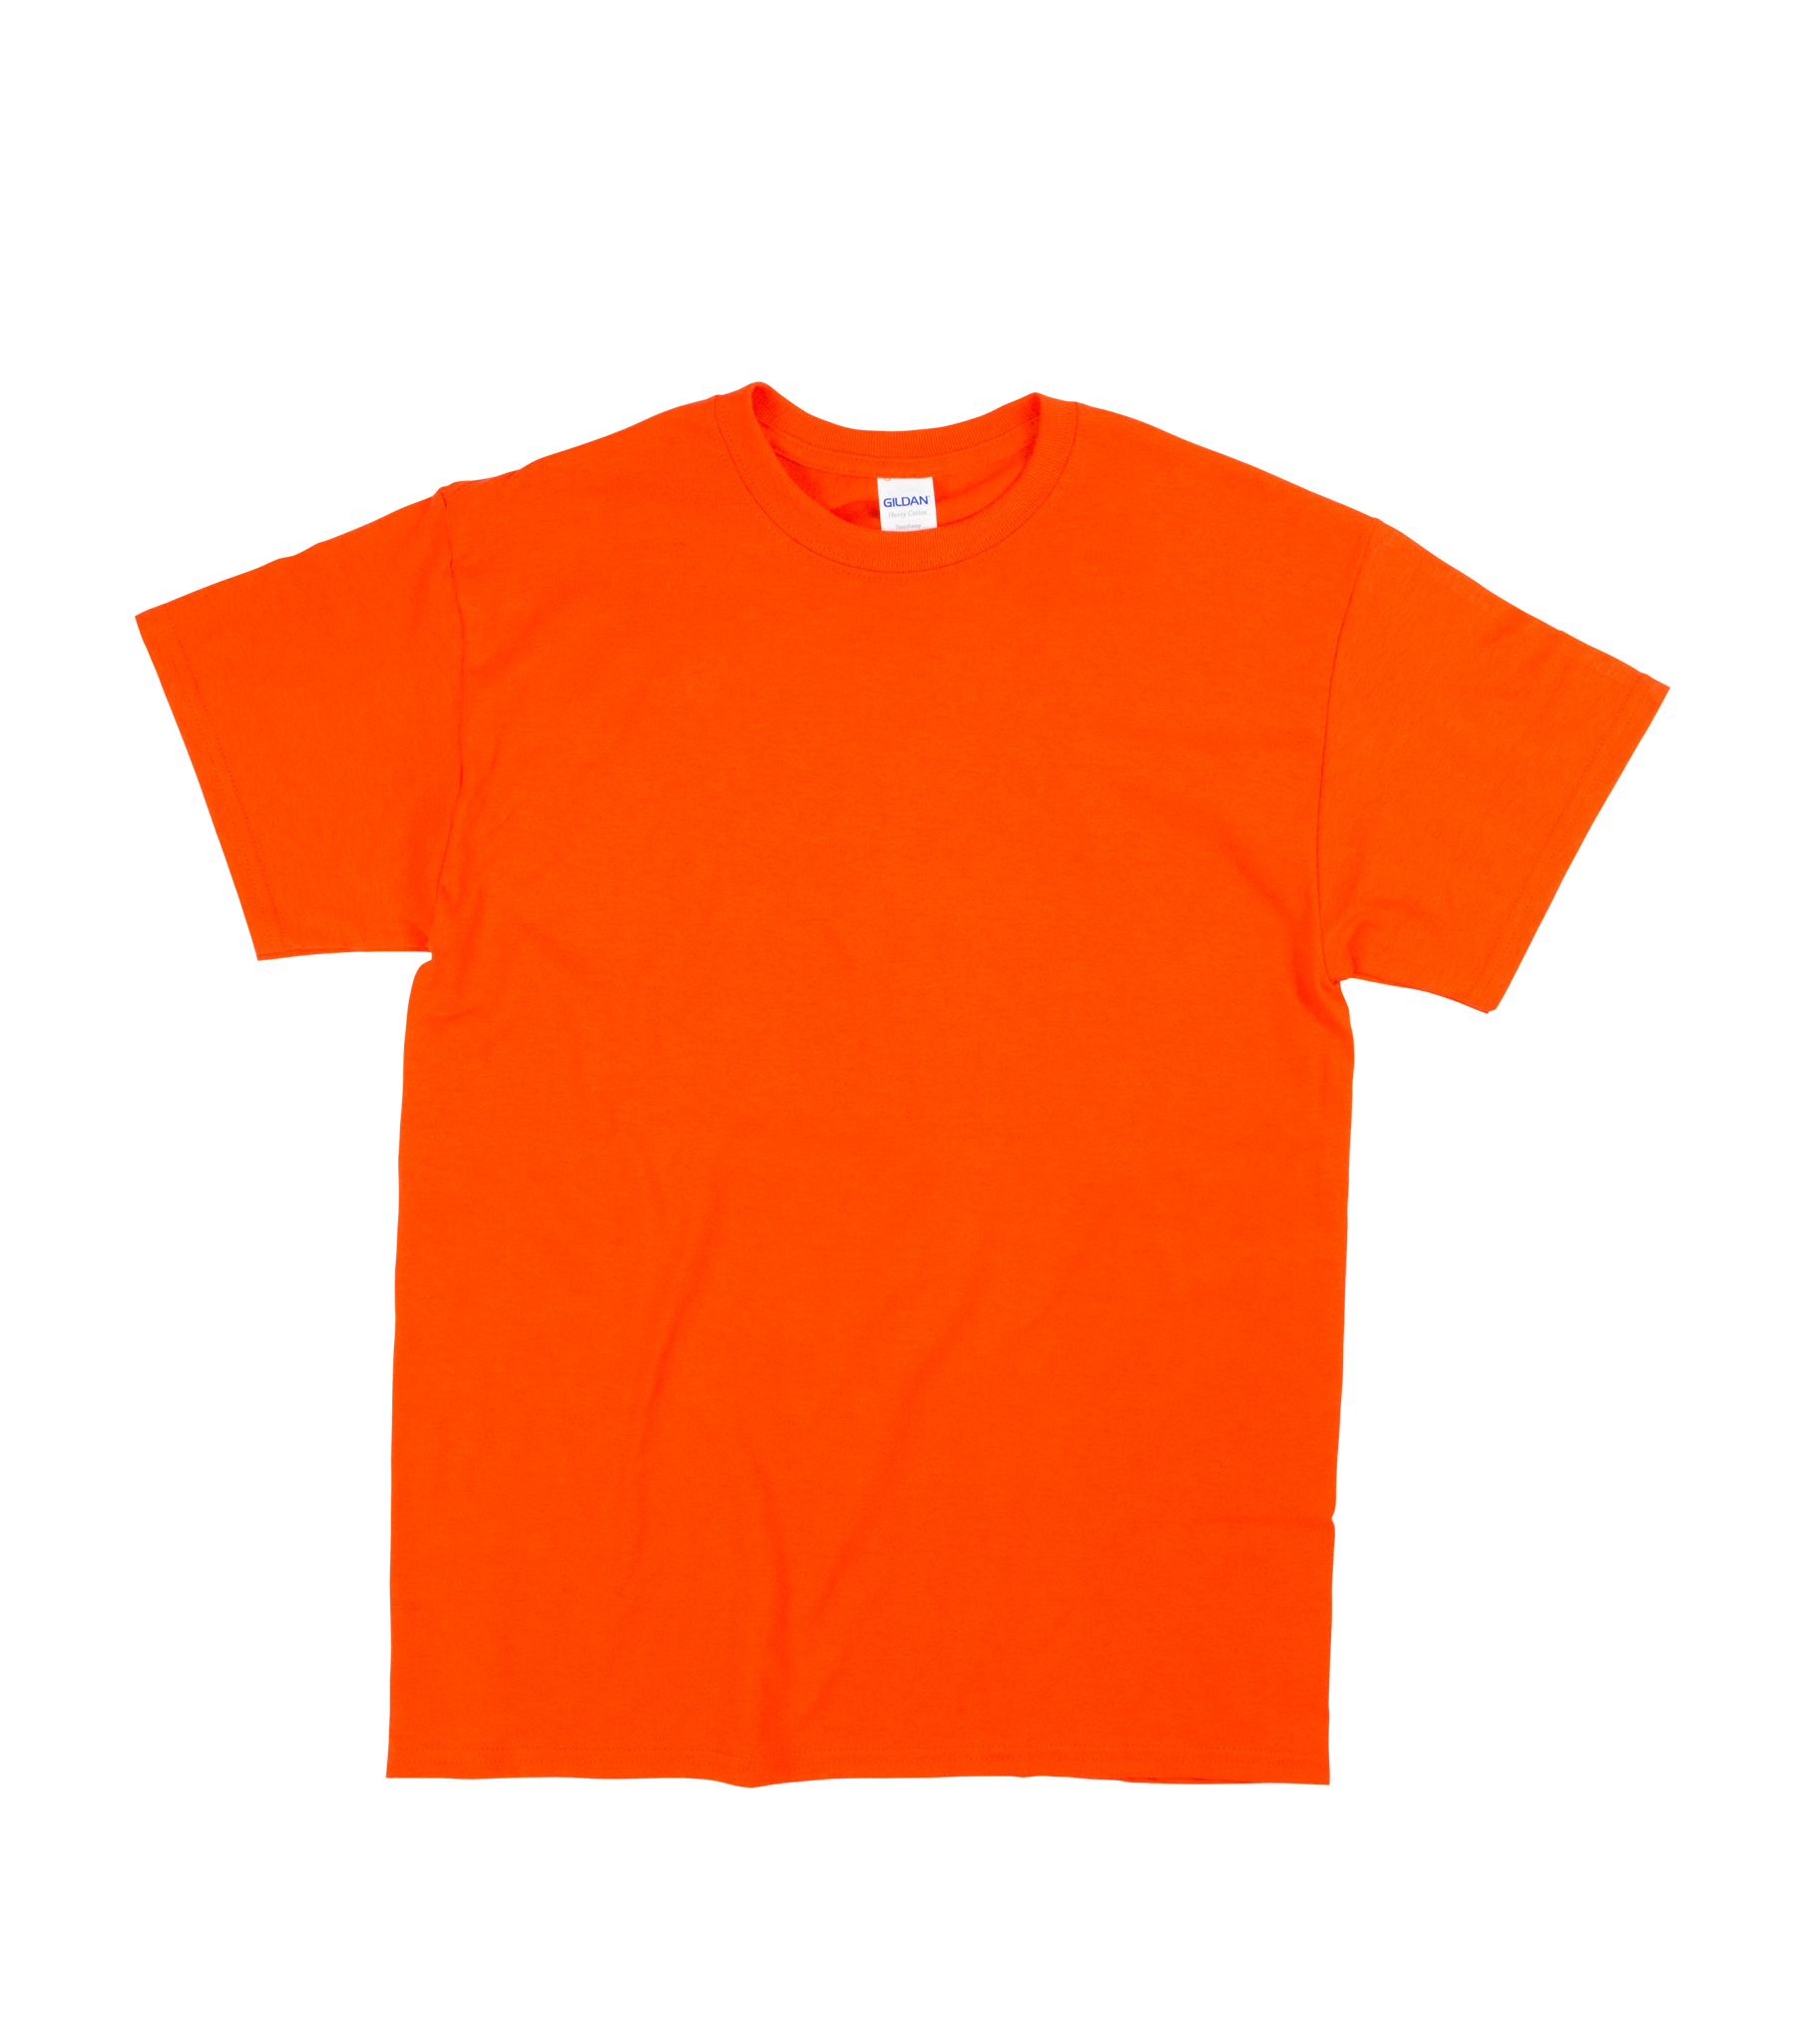 Orange Shirt Mockup